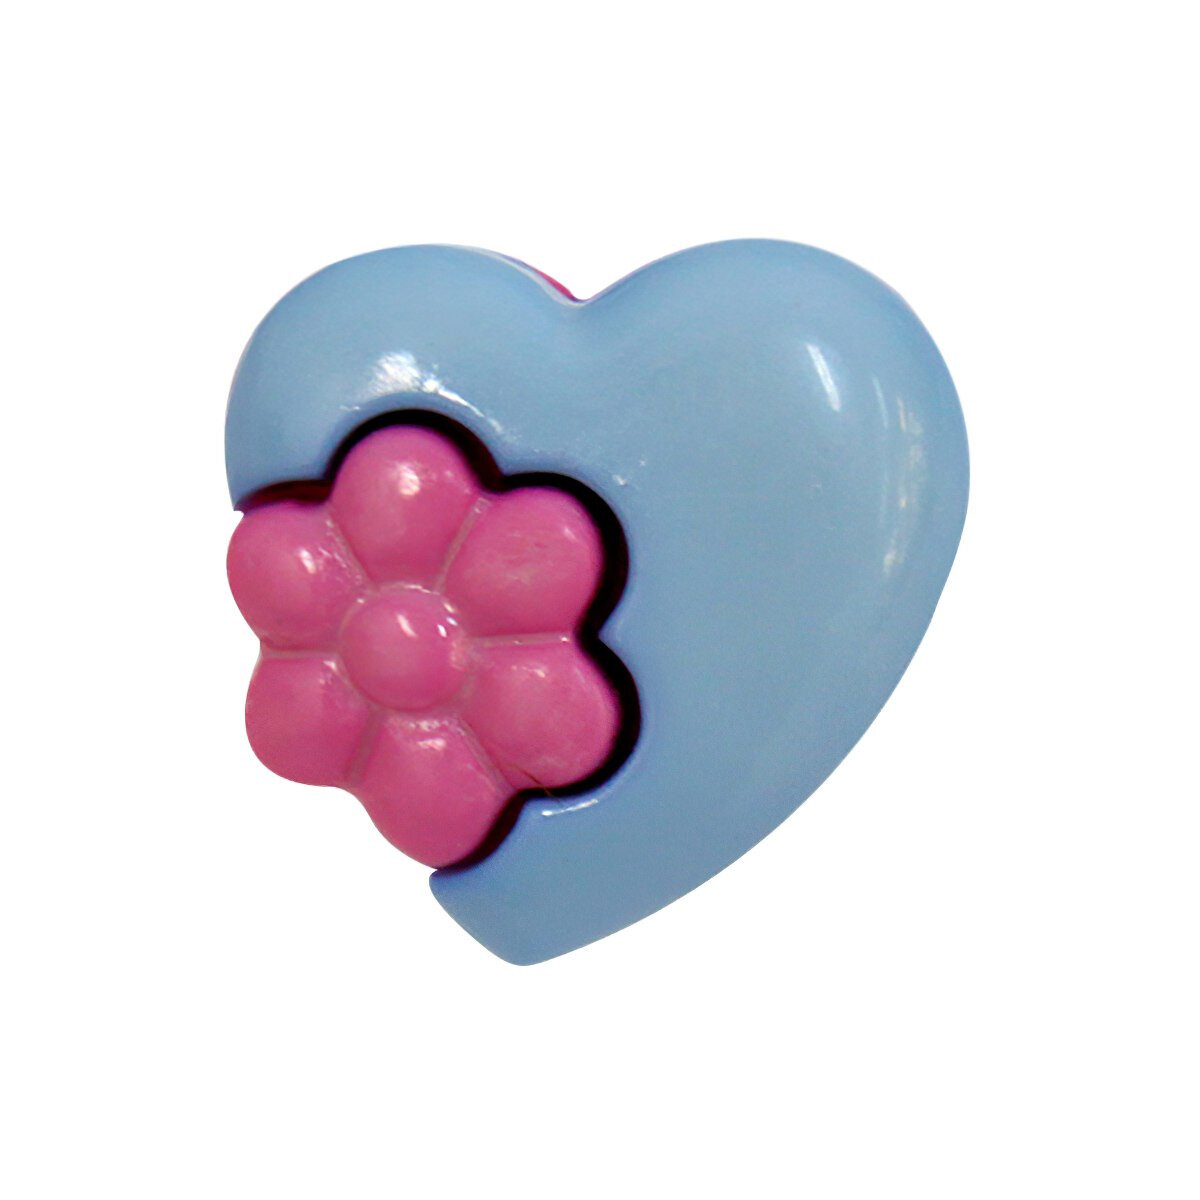 48634 Пуговица 'Сердце с цветком' 24L (15мм) на ножке, пластик, упак(36шт) (140/319 голубой/розовый)